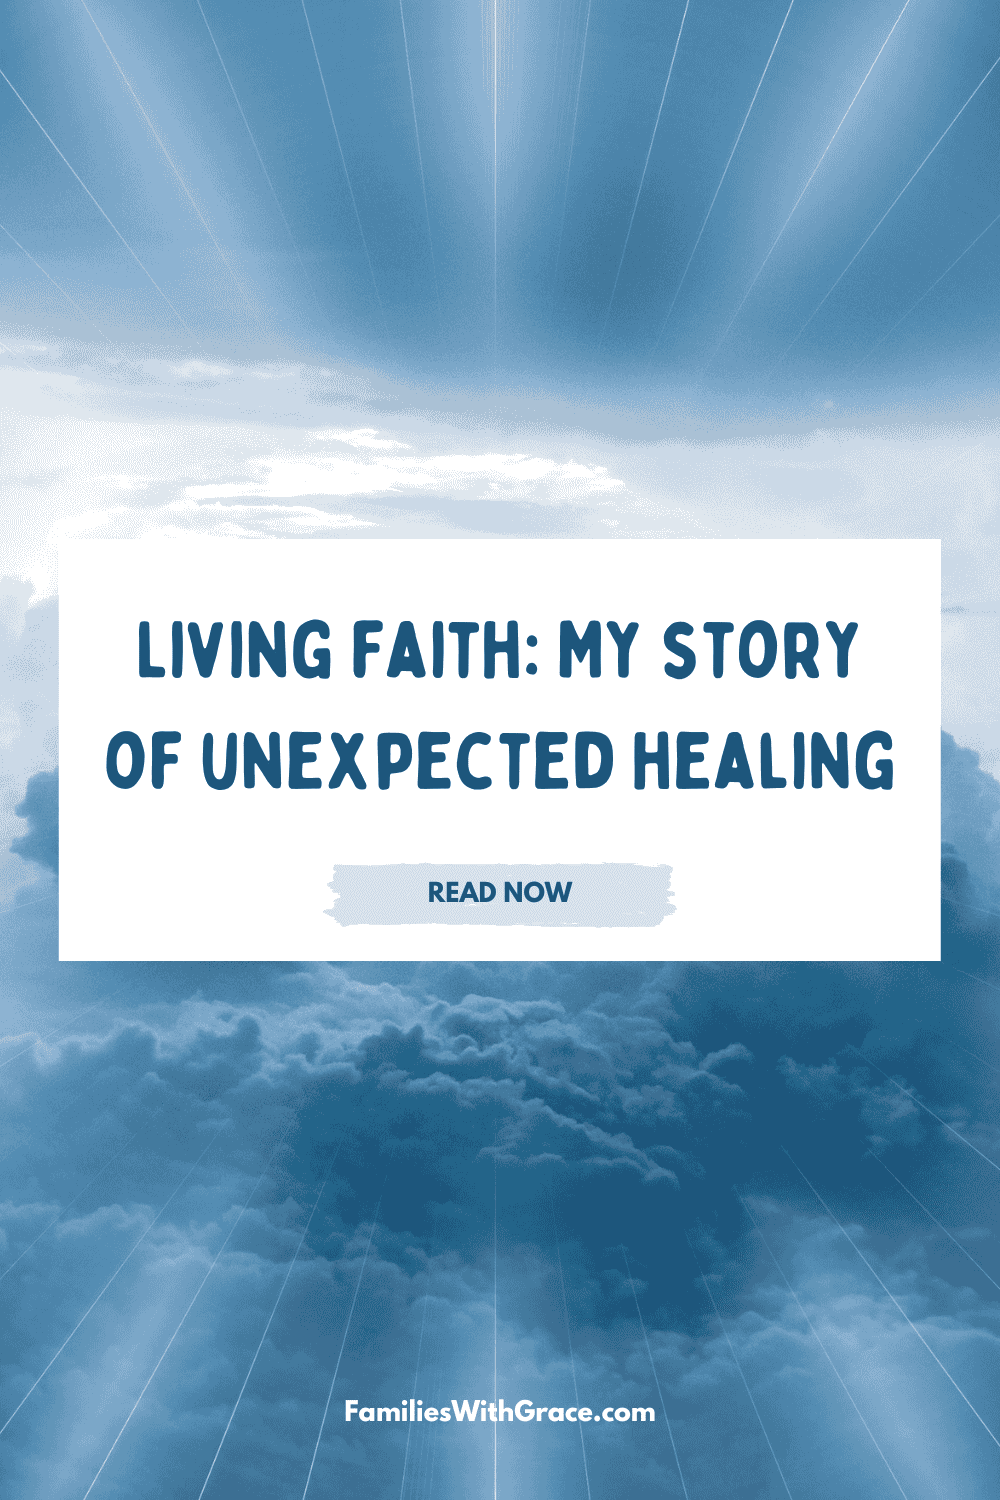 Living faith: My story of healing